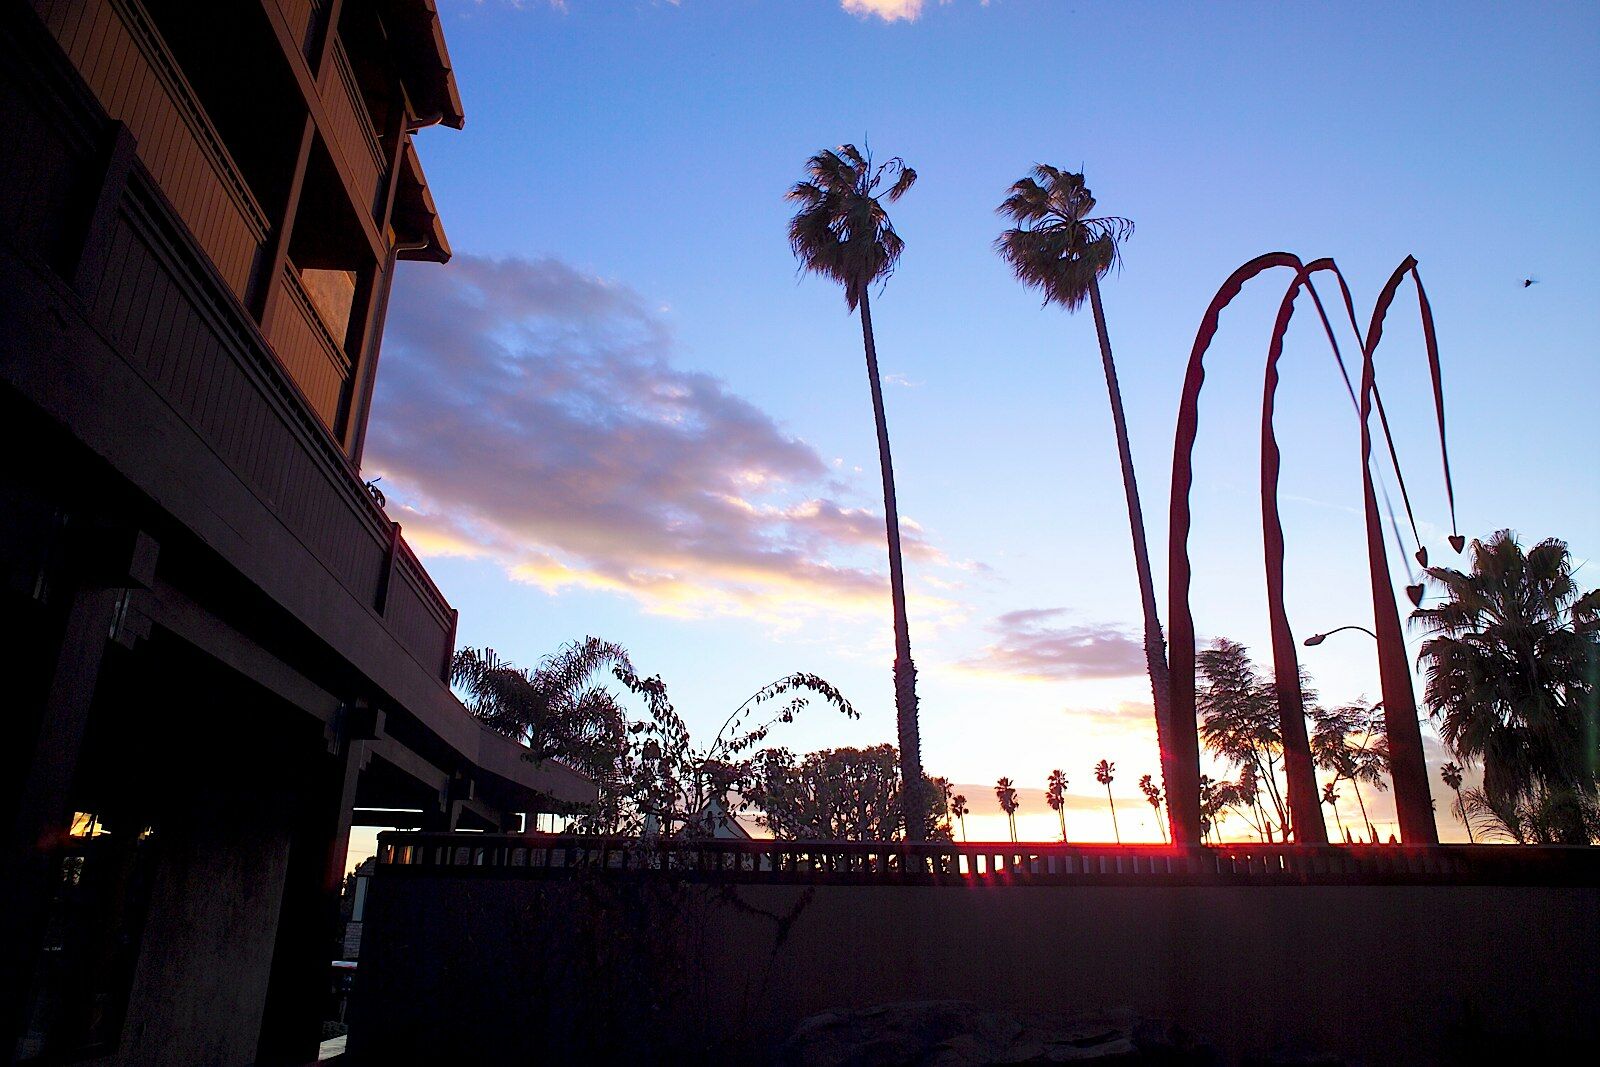 Ambrose Hotel Los Angeles Exterior photo